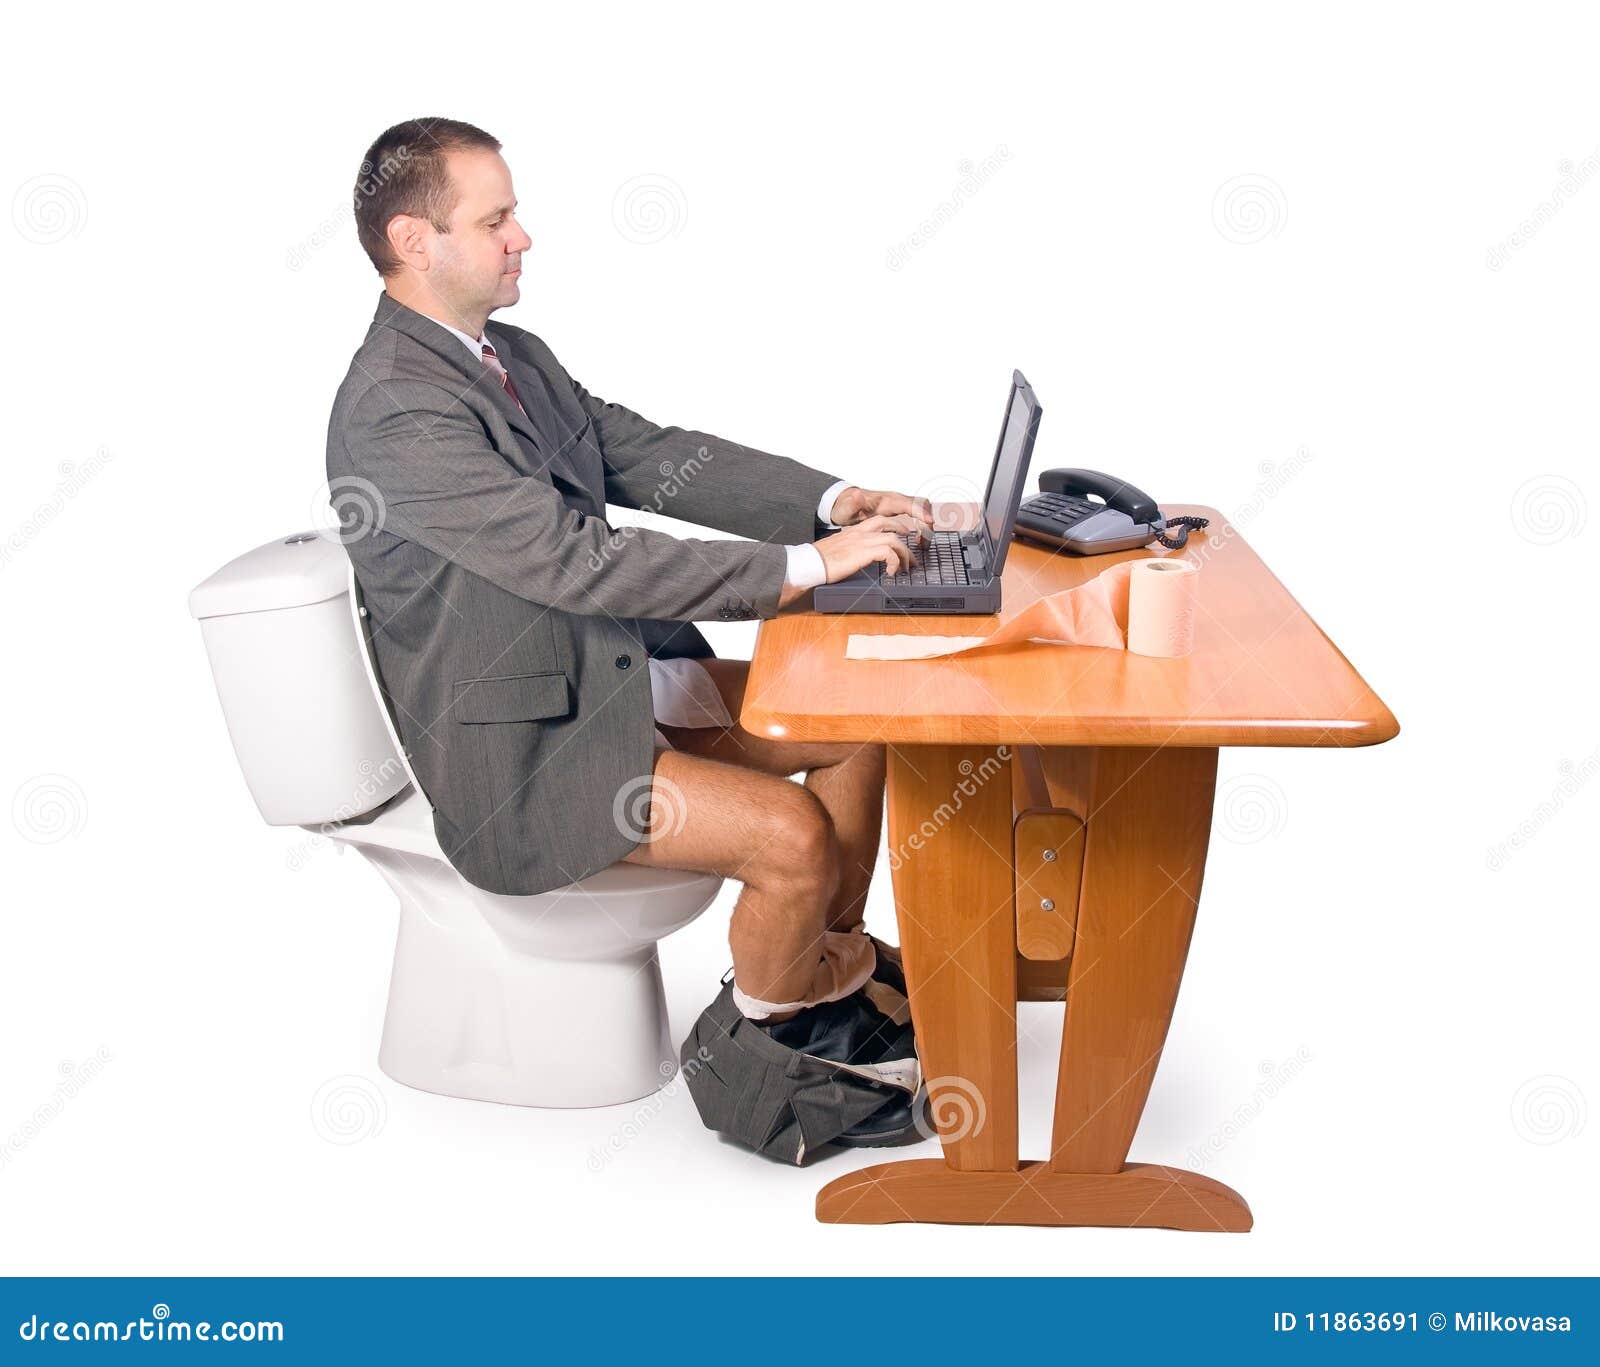 man-sitting-toilet-11863691.jpg